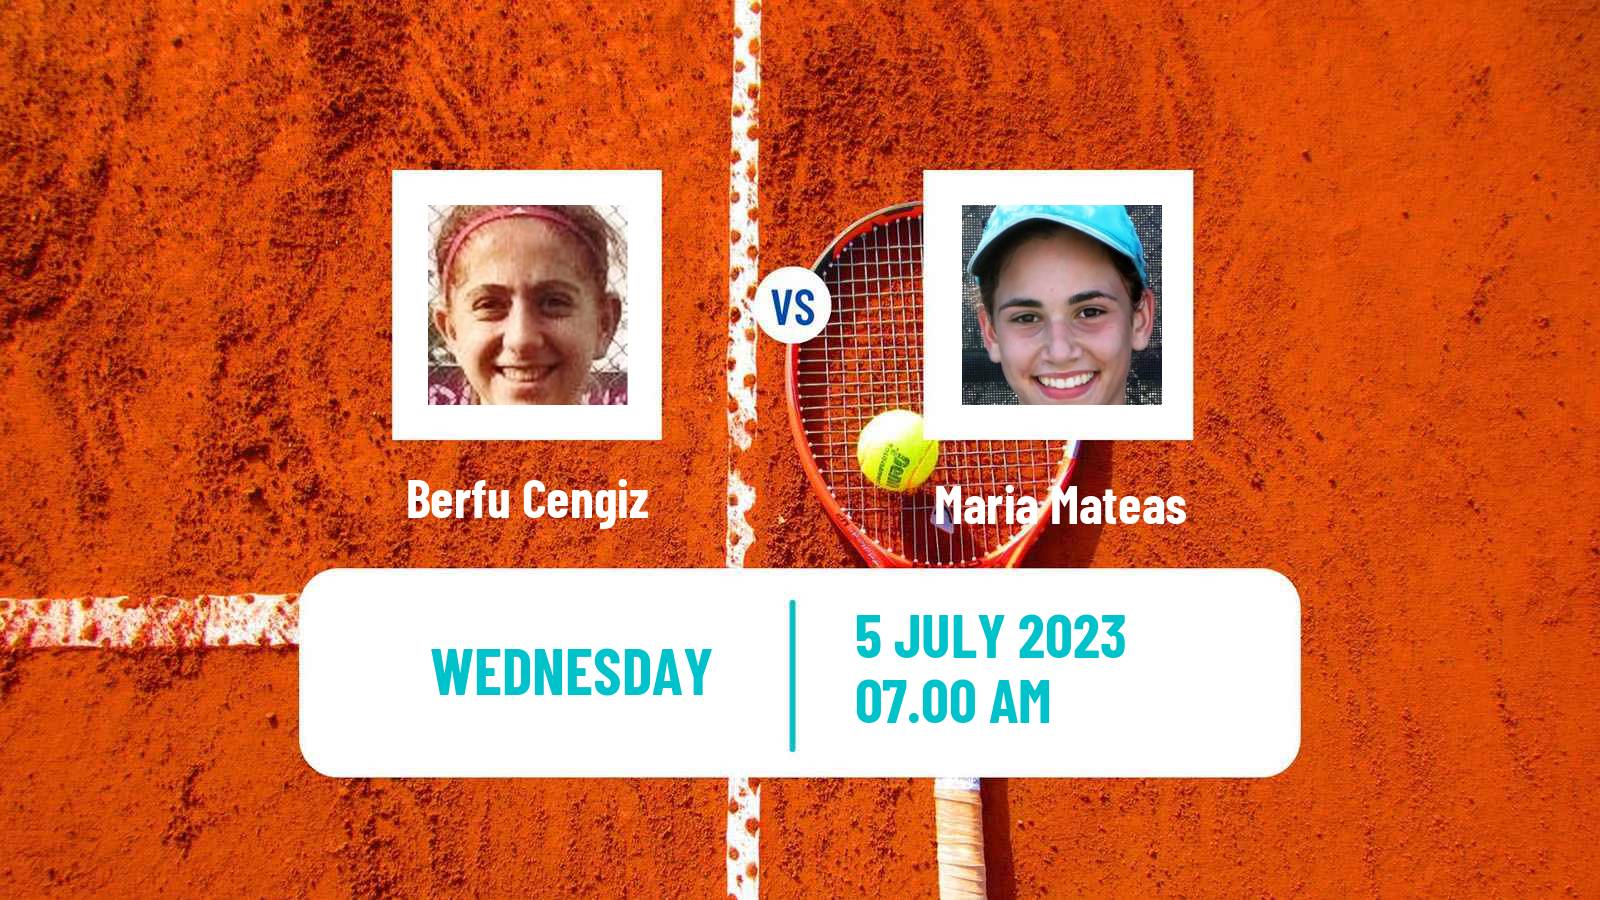 Tennis ITF W40 The Hague Women Berfu Cengiz - Maria Mateas